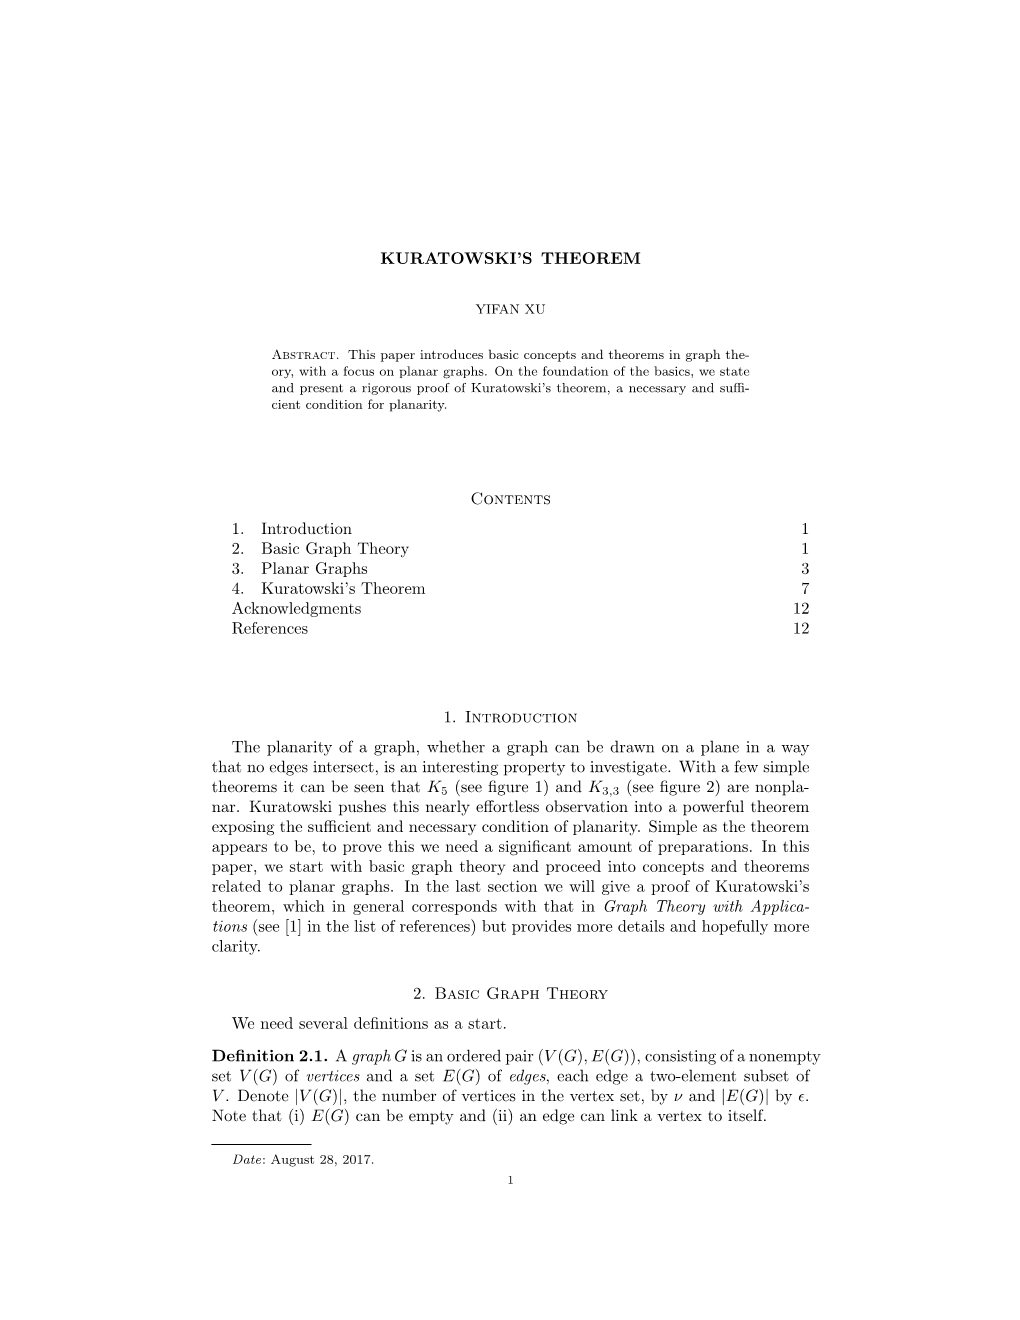 KURATOWSKI's THEOREM Contents 1. Introduction 1 2. Basic Graph